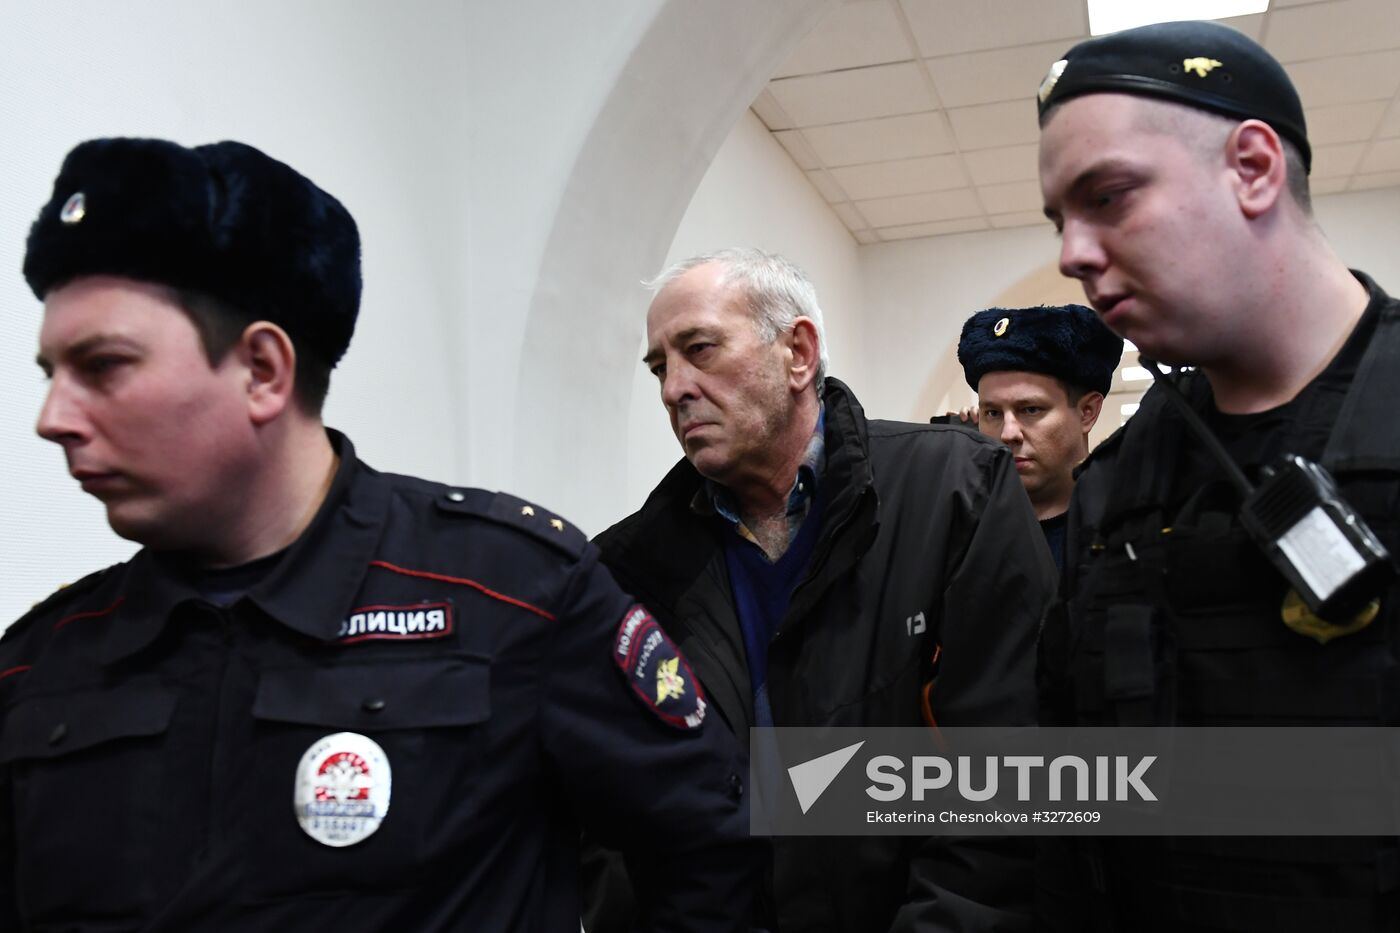 Moscow's Basmanny Court considers arrest warrant for bus driver Tikhonov